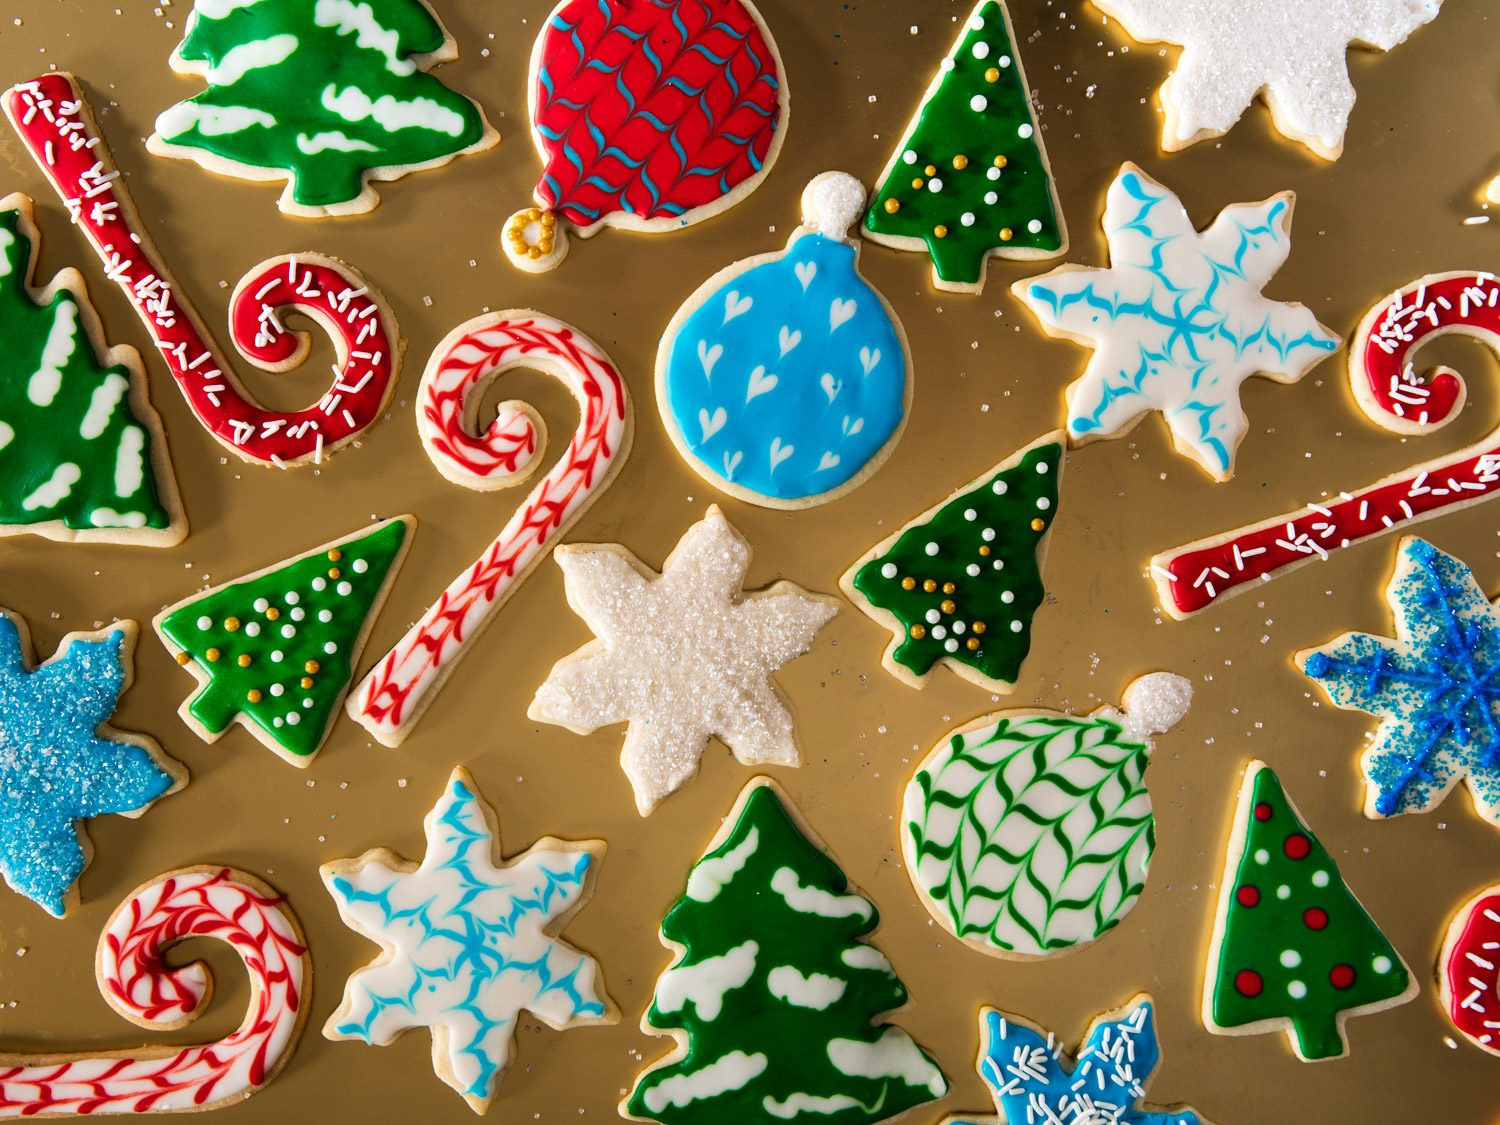 Decorated Christmas Sugar Cookies
 A Royal Icing Tutorial Decorate Christmas Cookies Like a